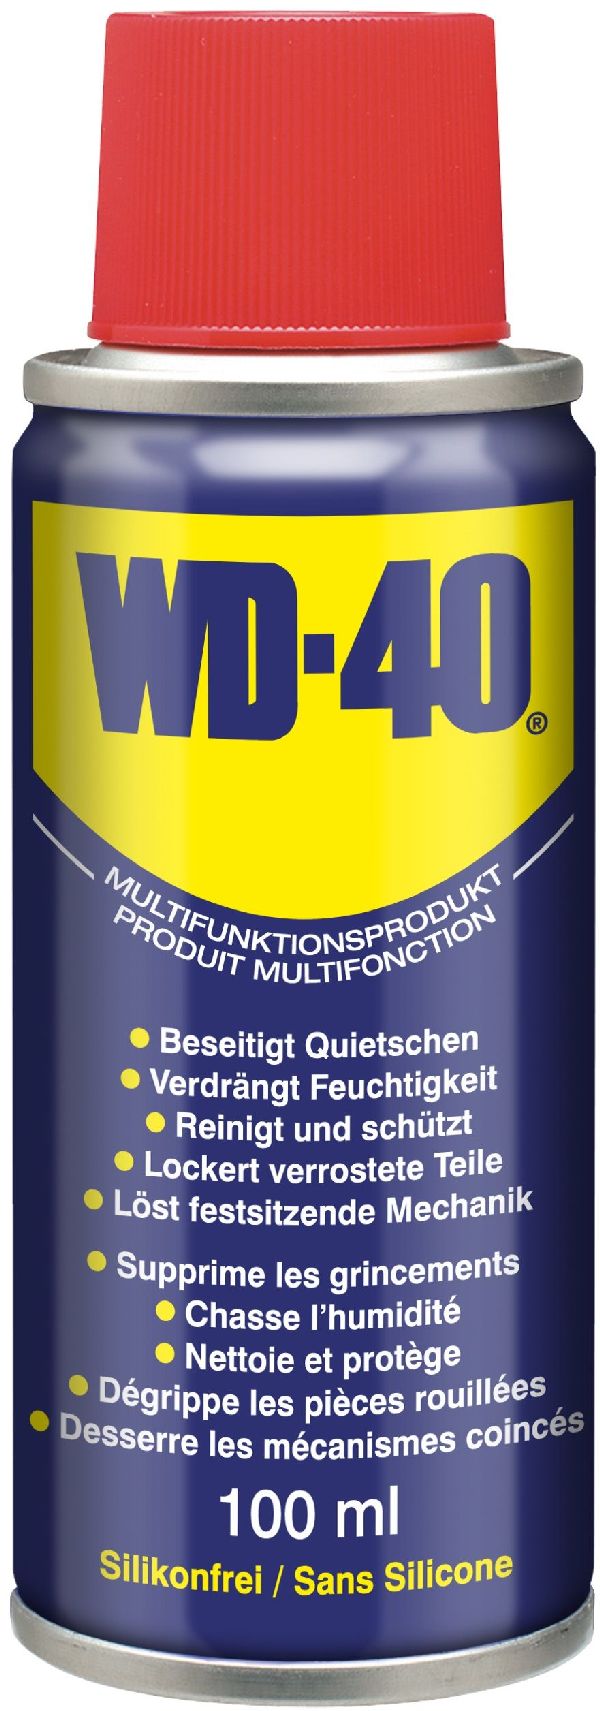 WD-40 huile mutlifonctionnel Bombe arosol 100 ml